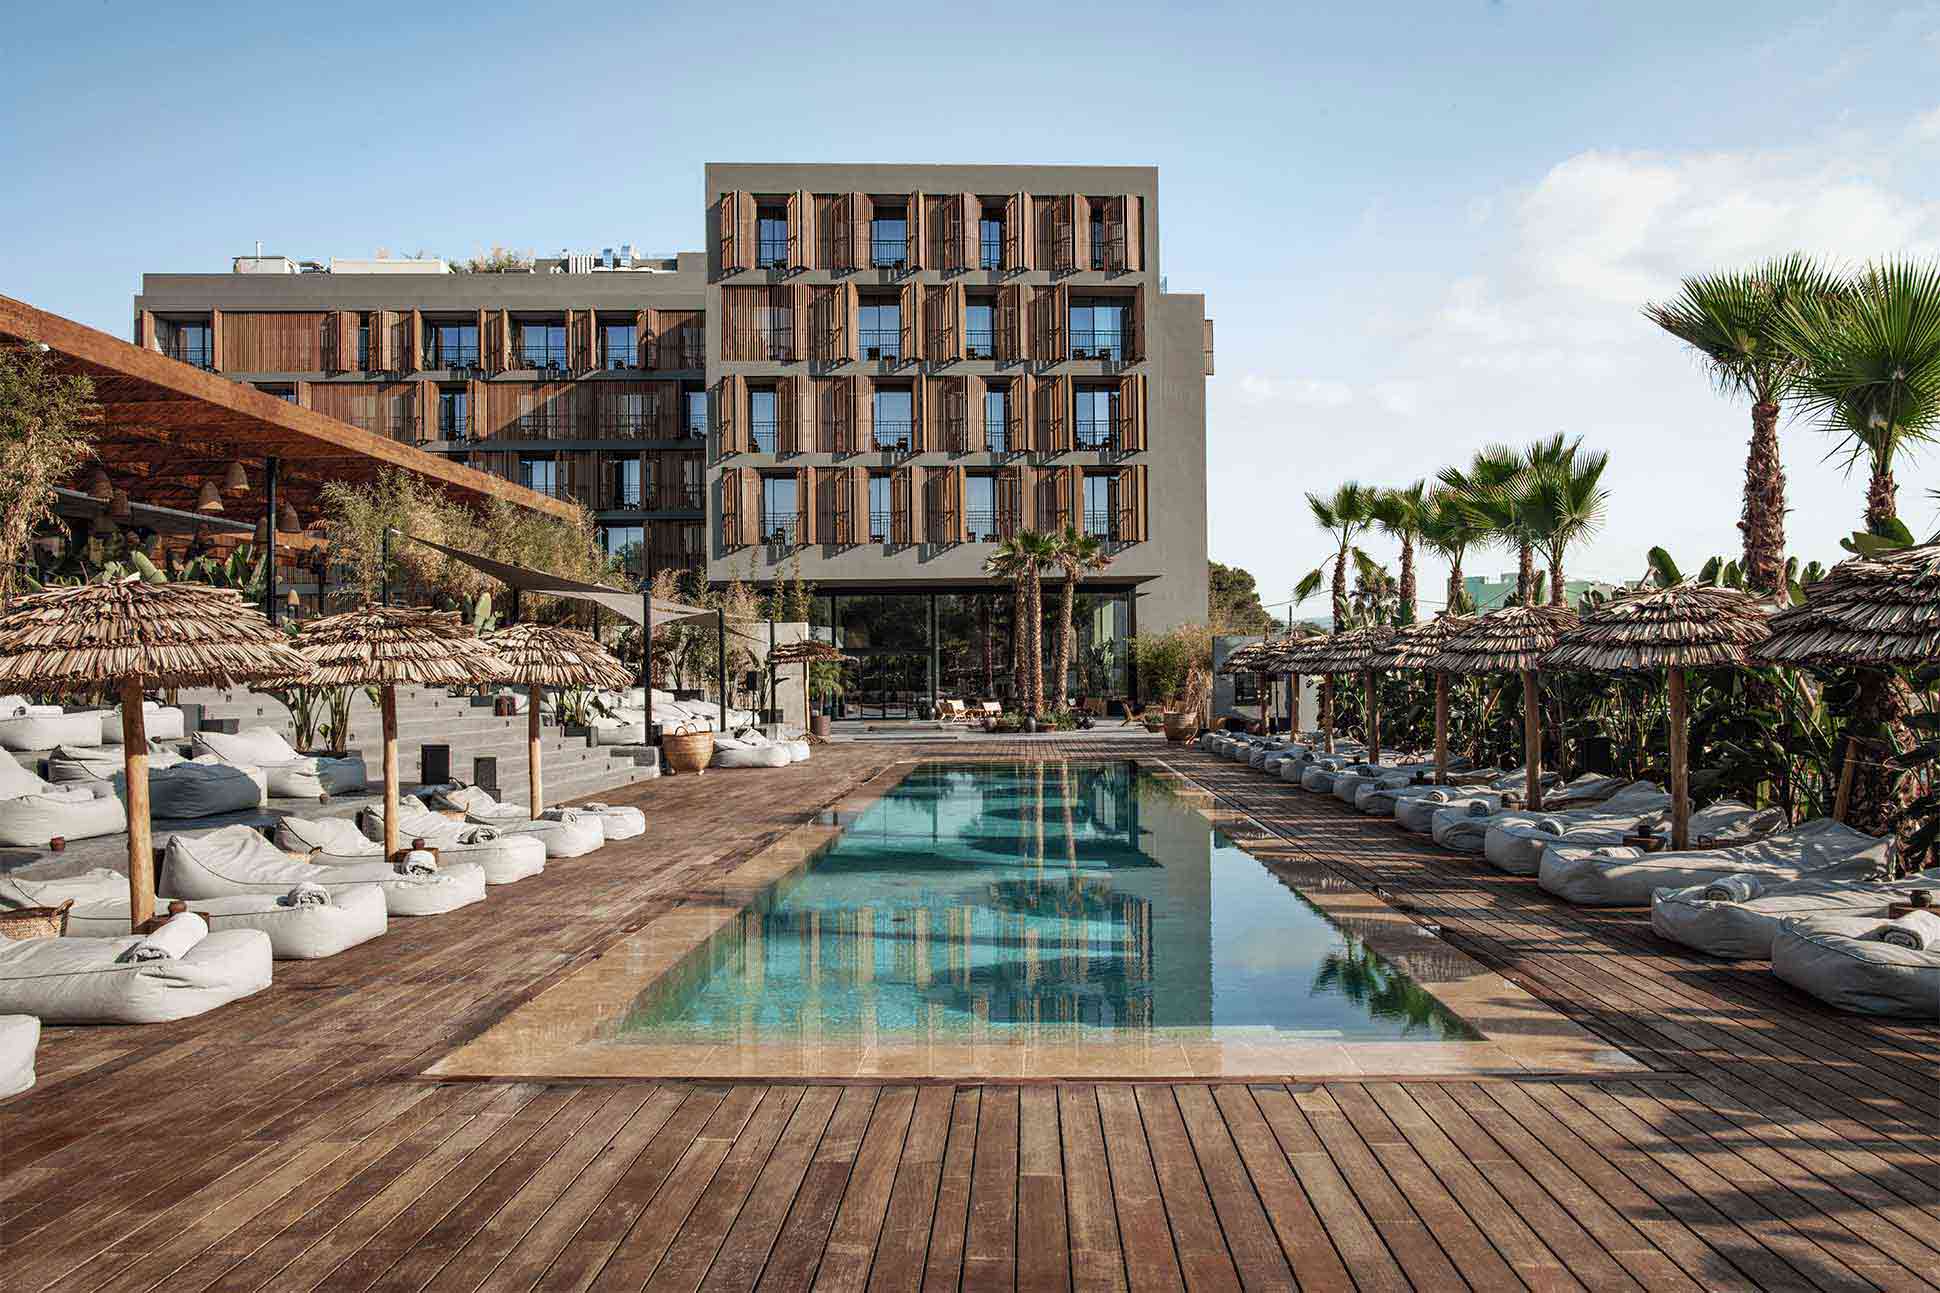 Ibiza hotels 2.0 The next generation OutThere magazine image